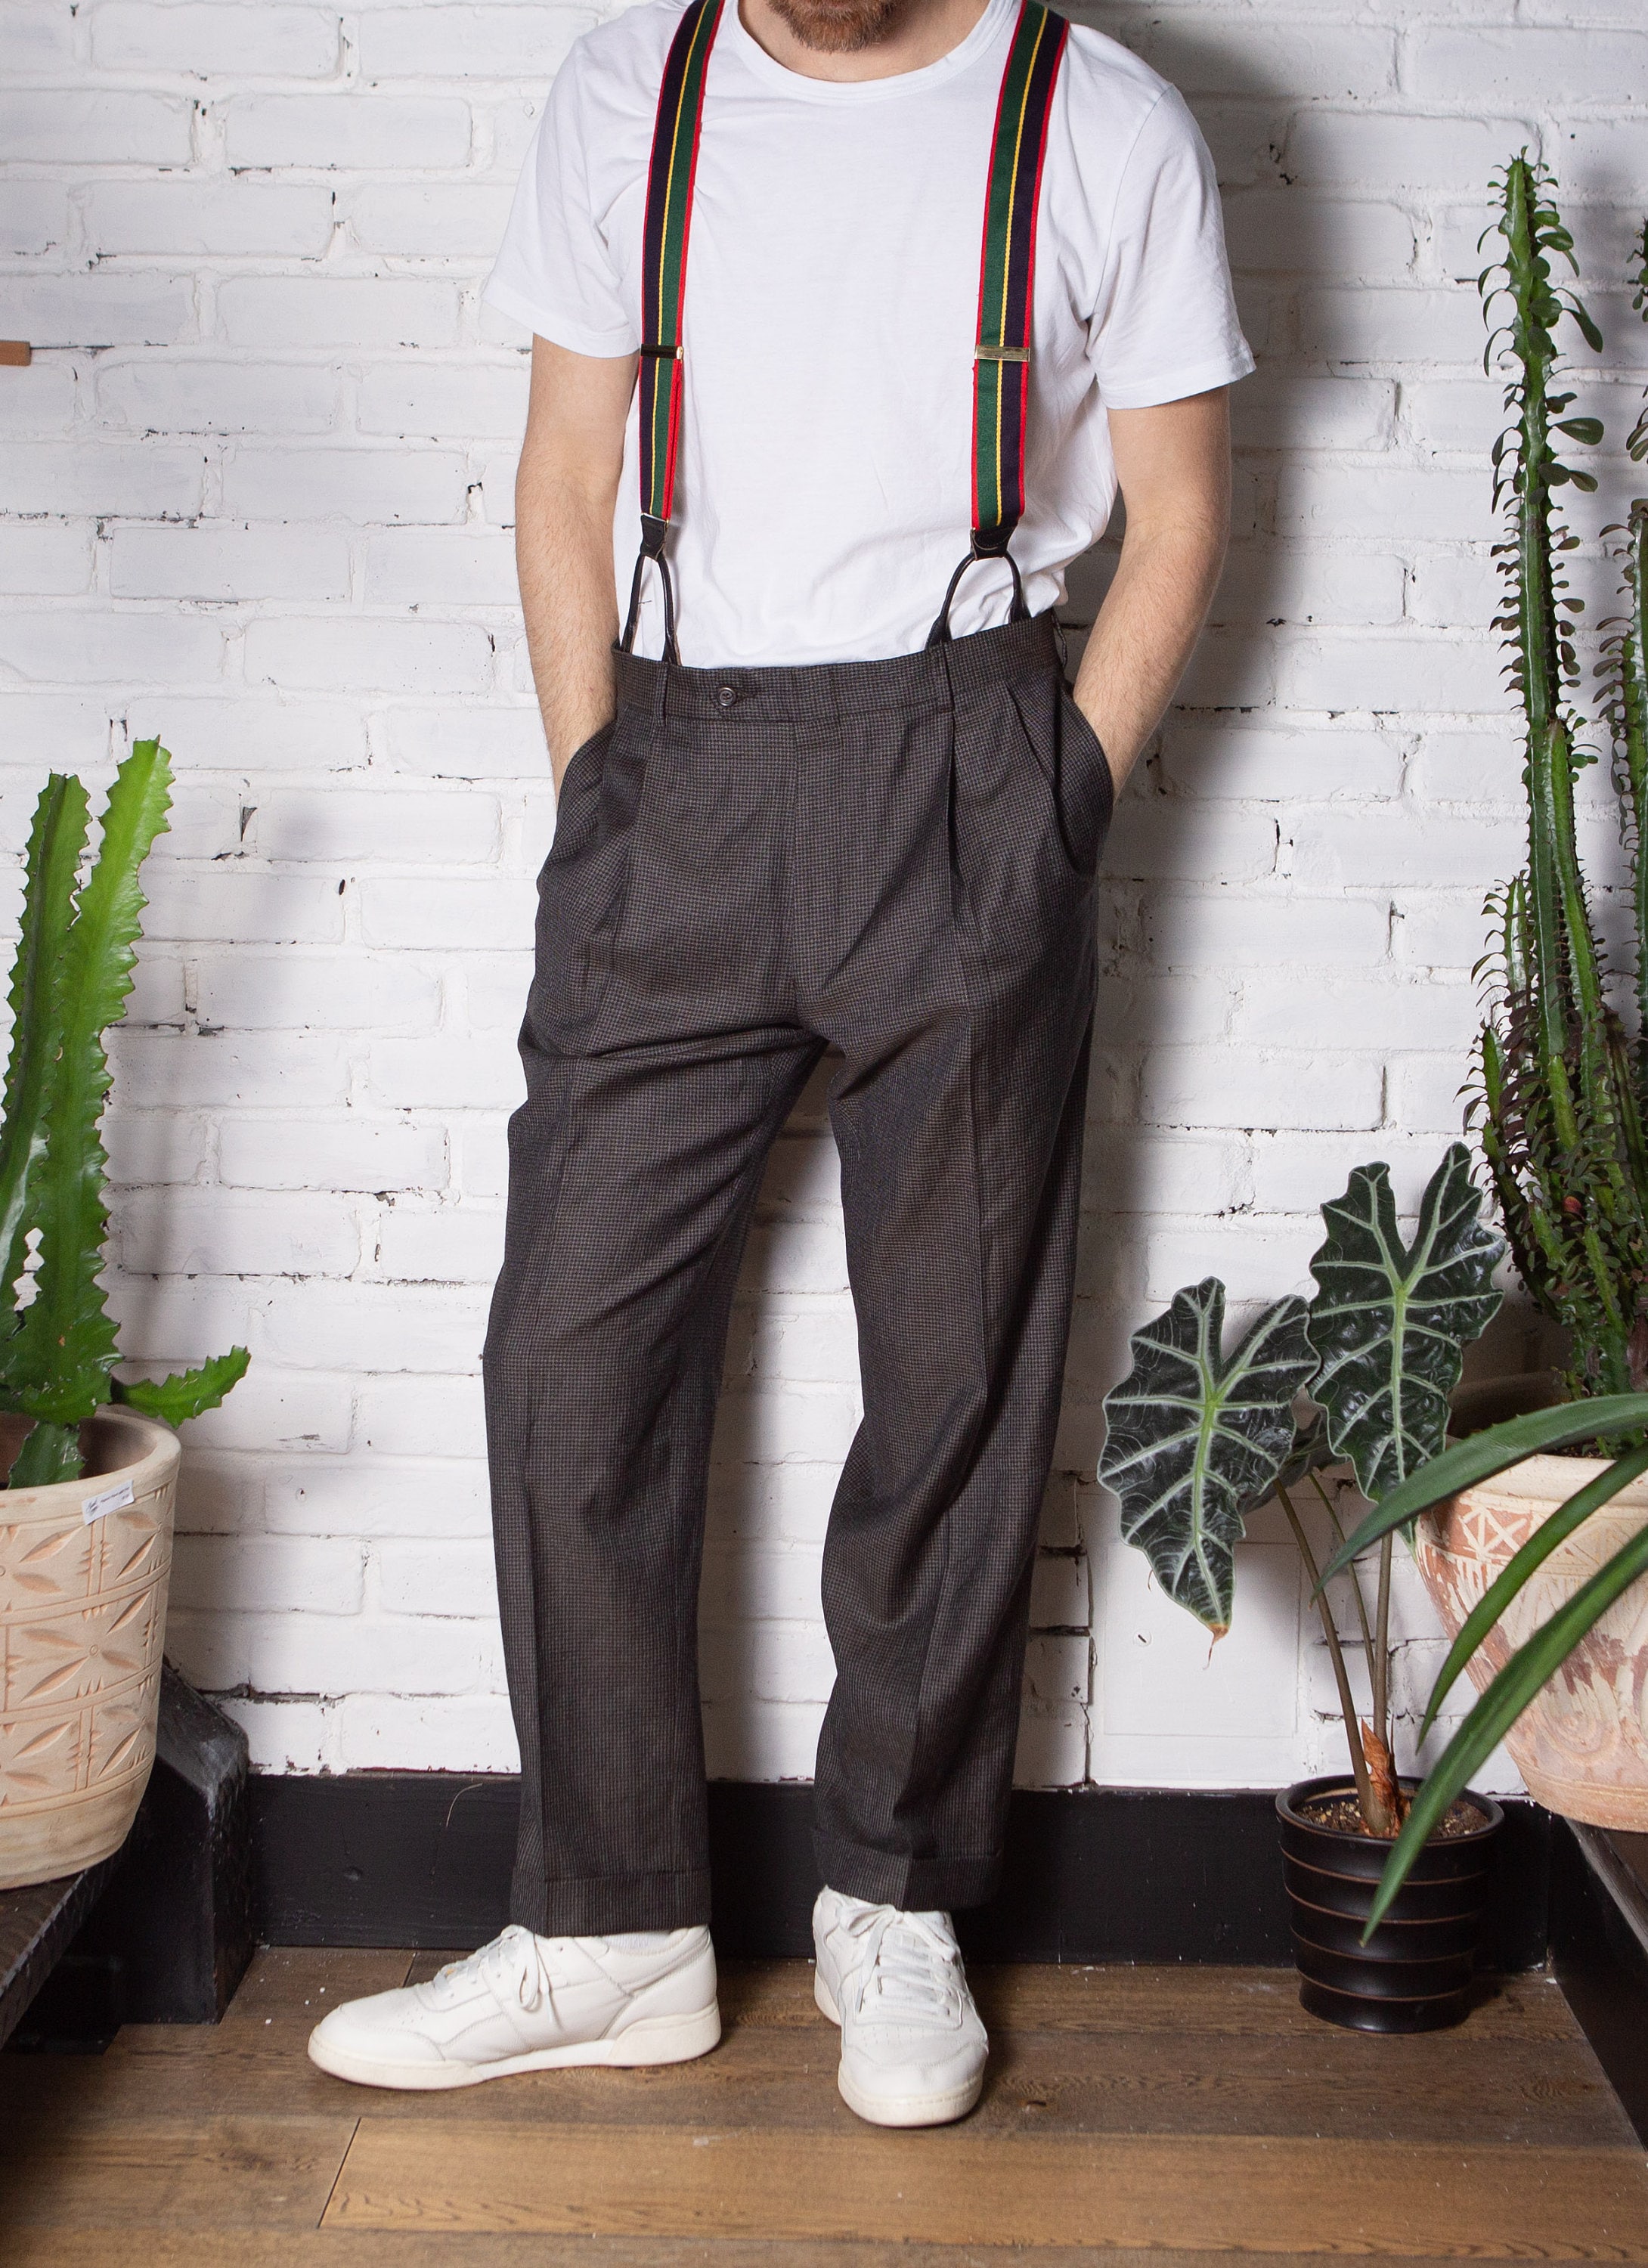 Vintage Mens Trousers with Suspenders - W35 Brown Houndstooth Dress Pants  with Suspenders - Formal Event - Wedding Groom Groomsman Pants